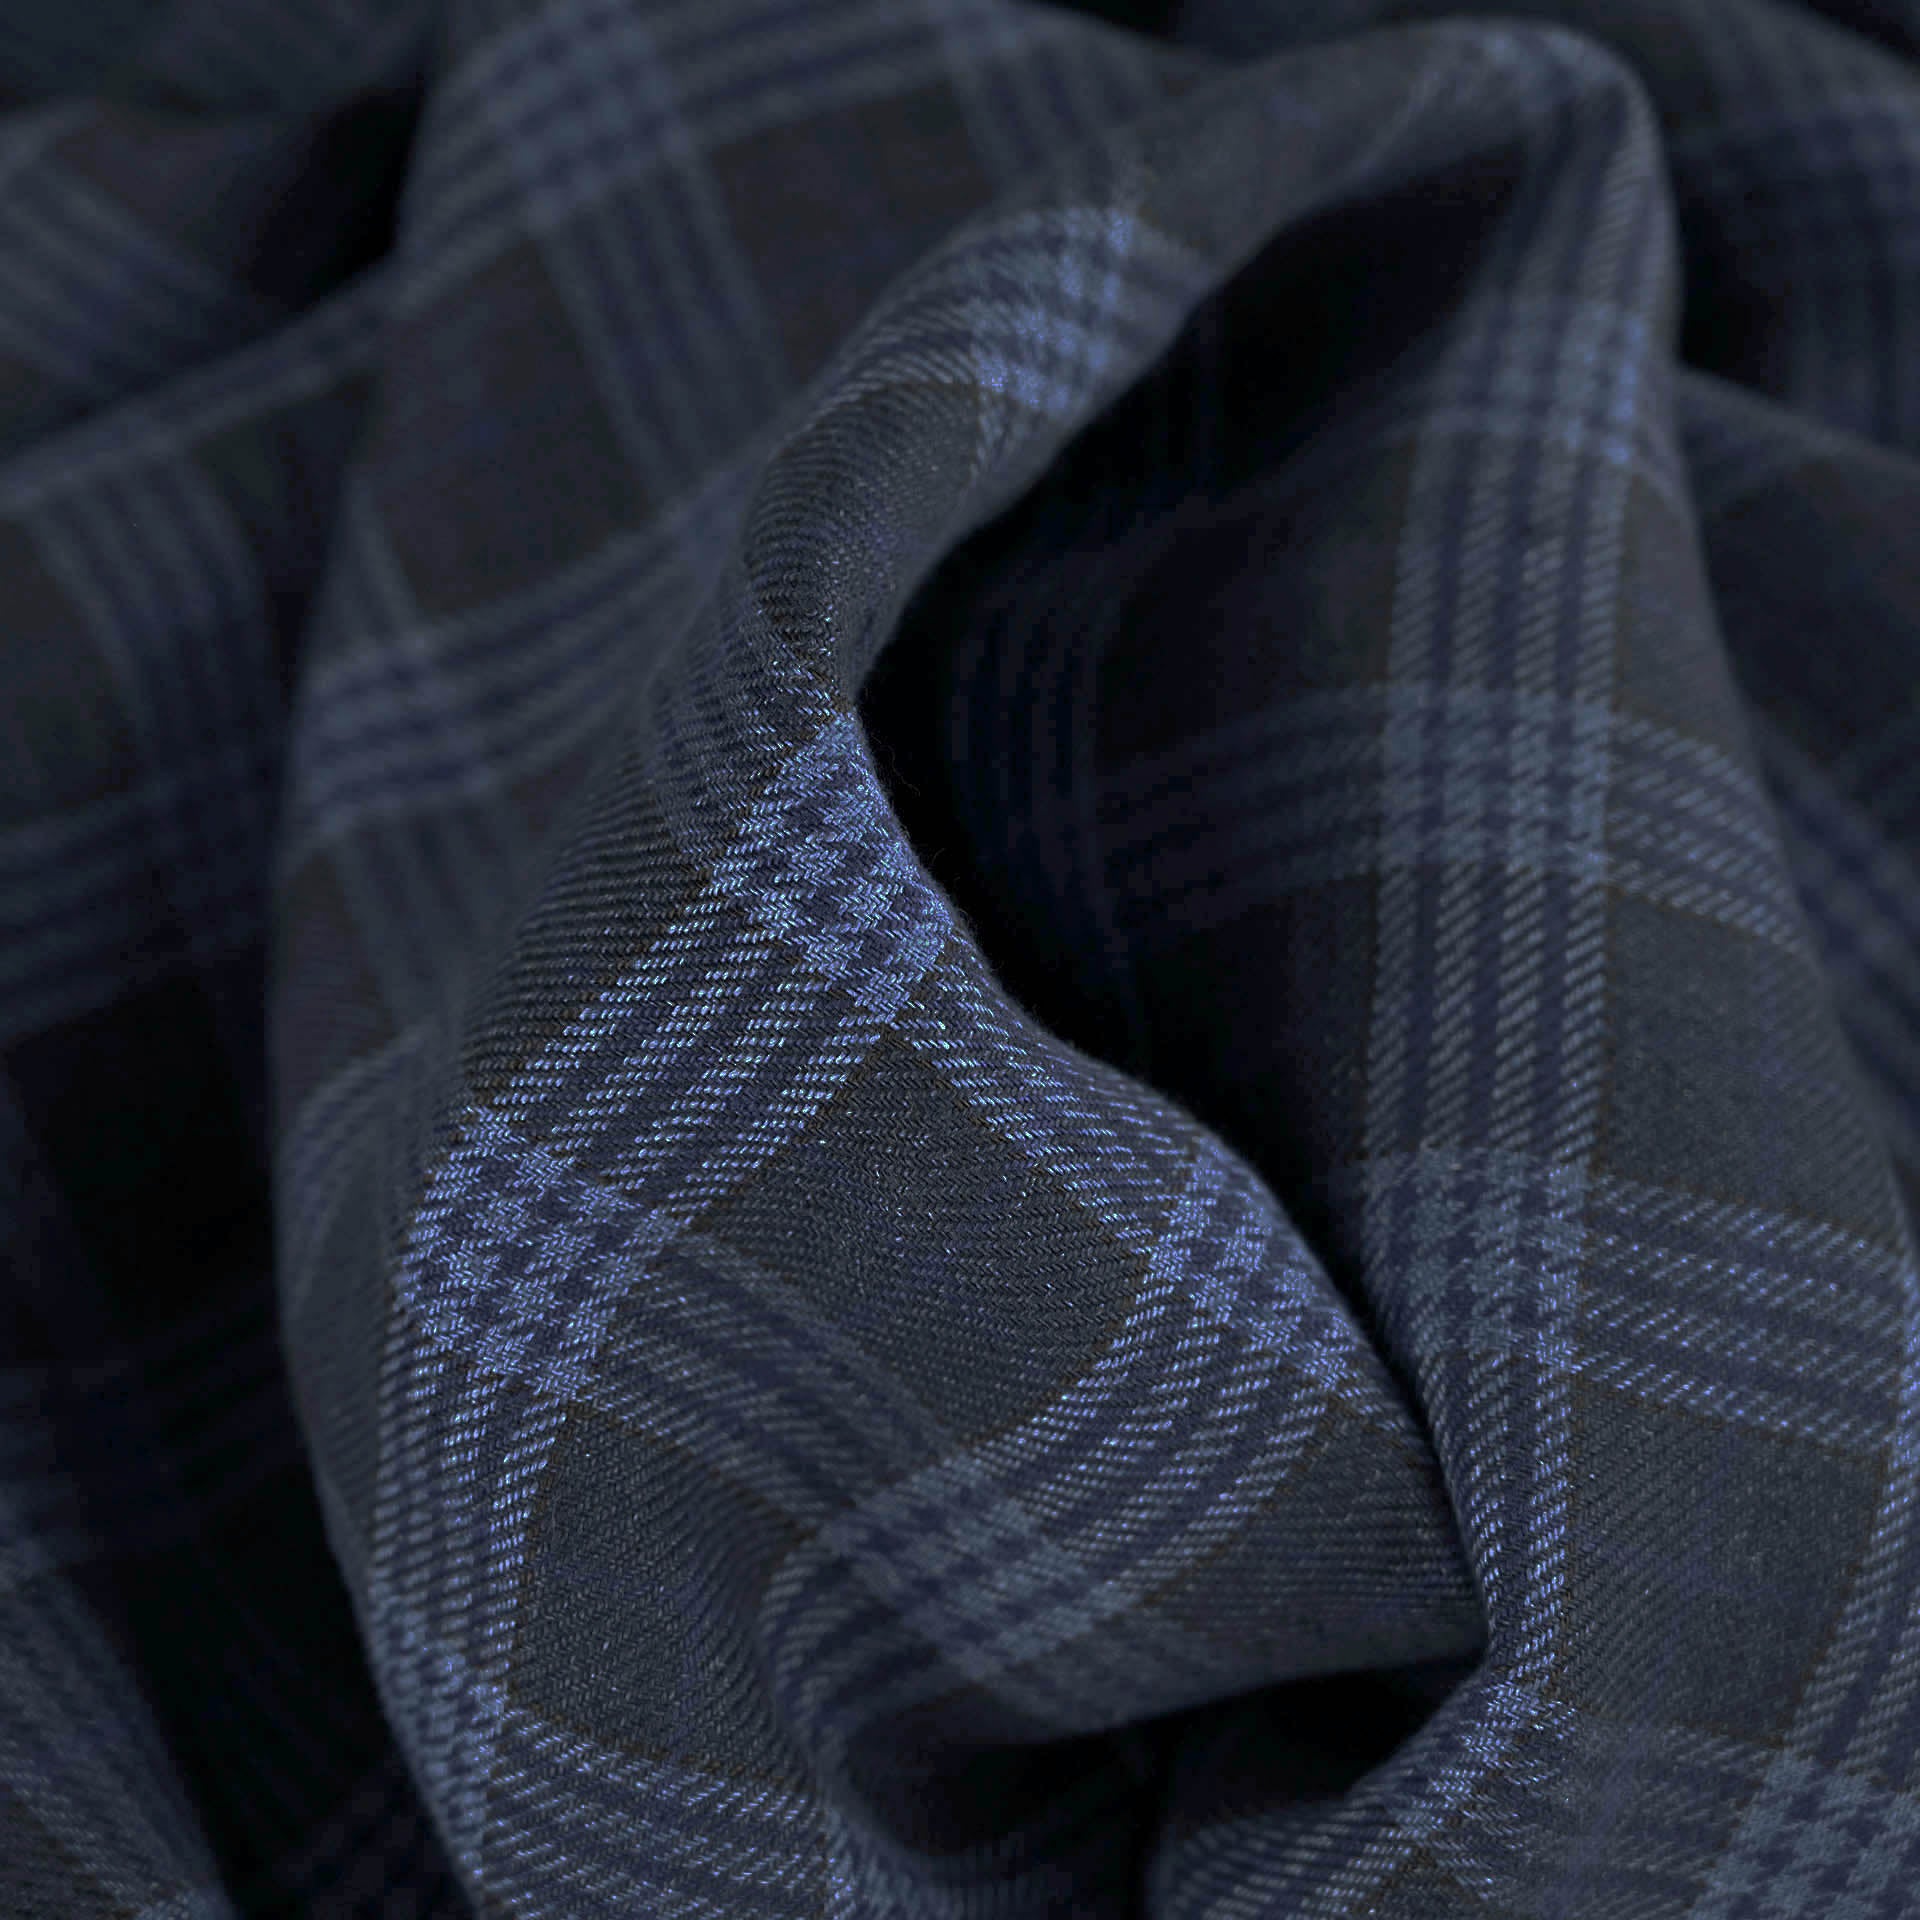 Blue Check Linen Fabric 4121